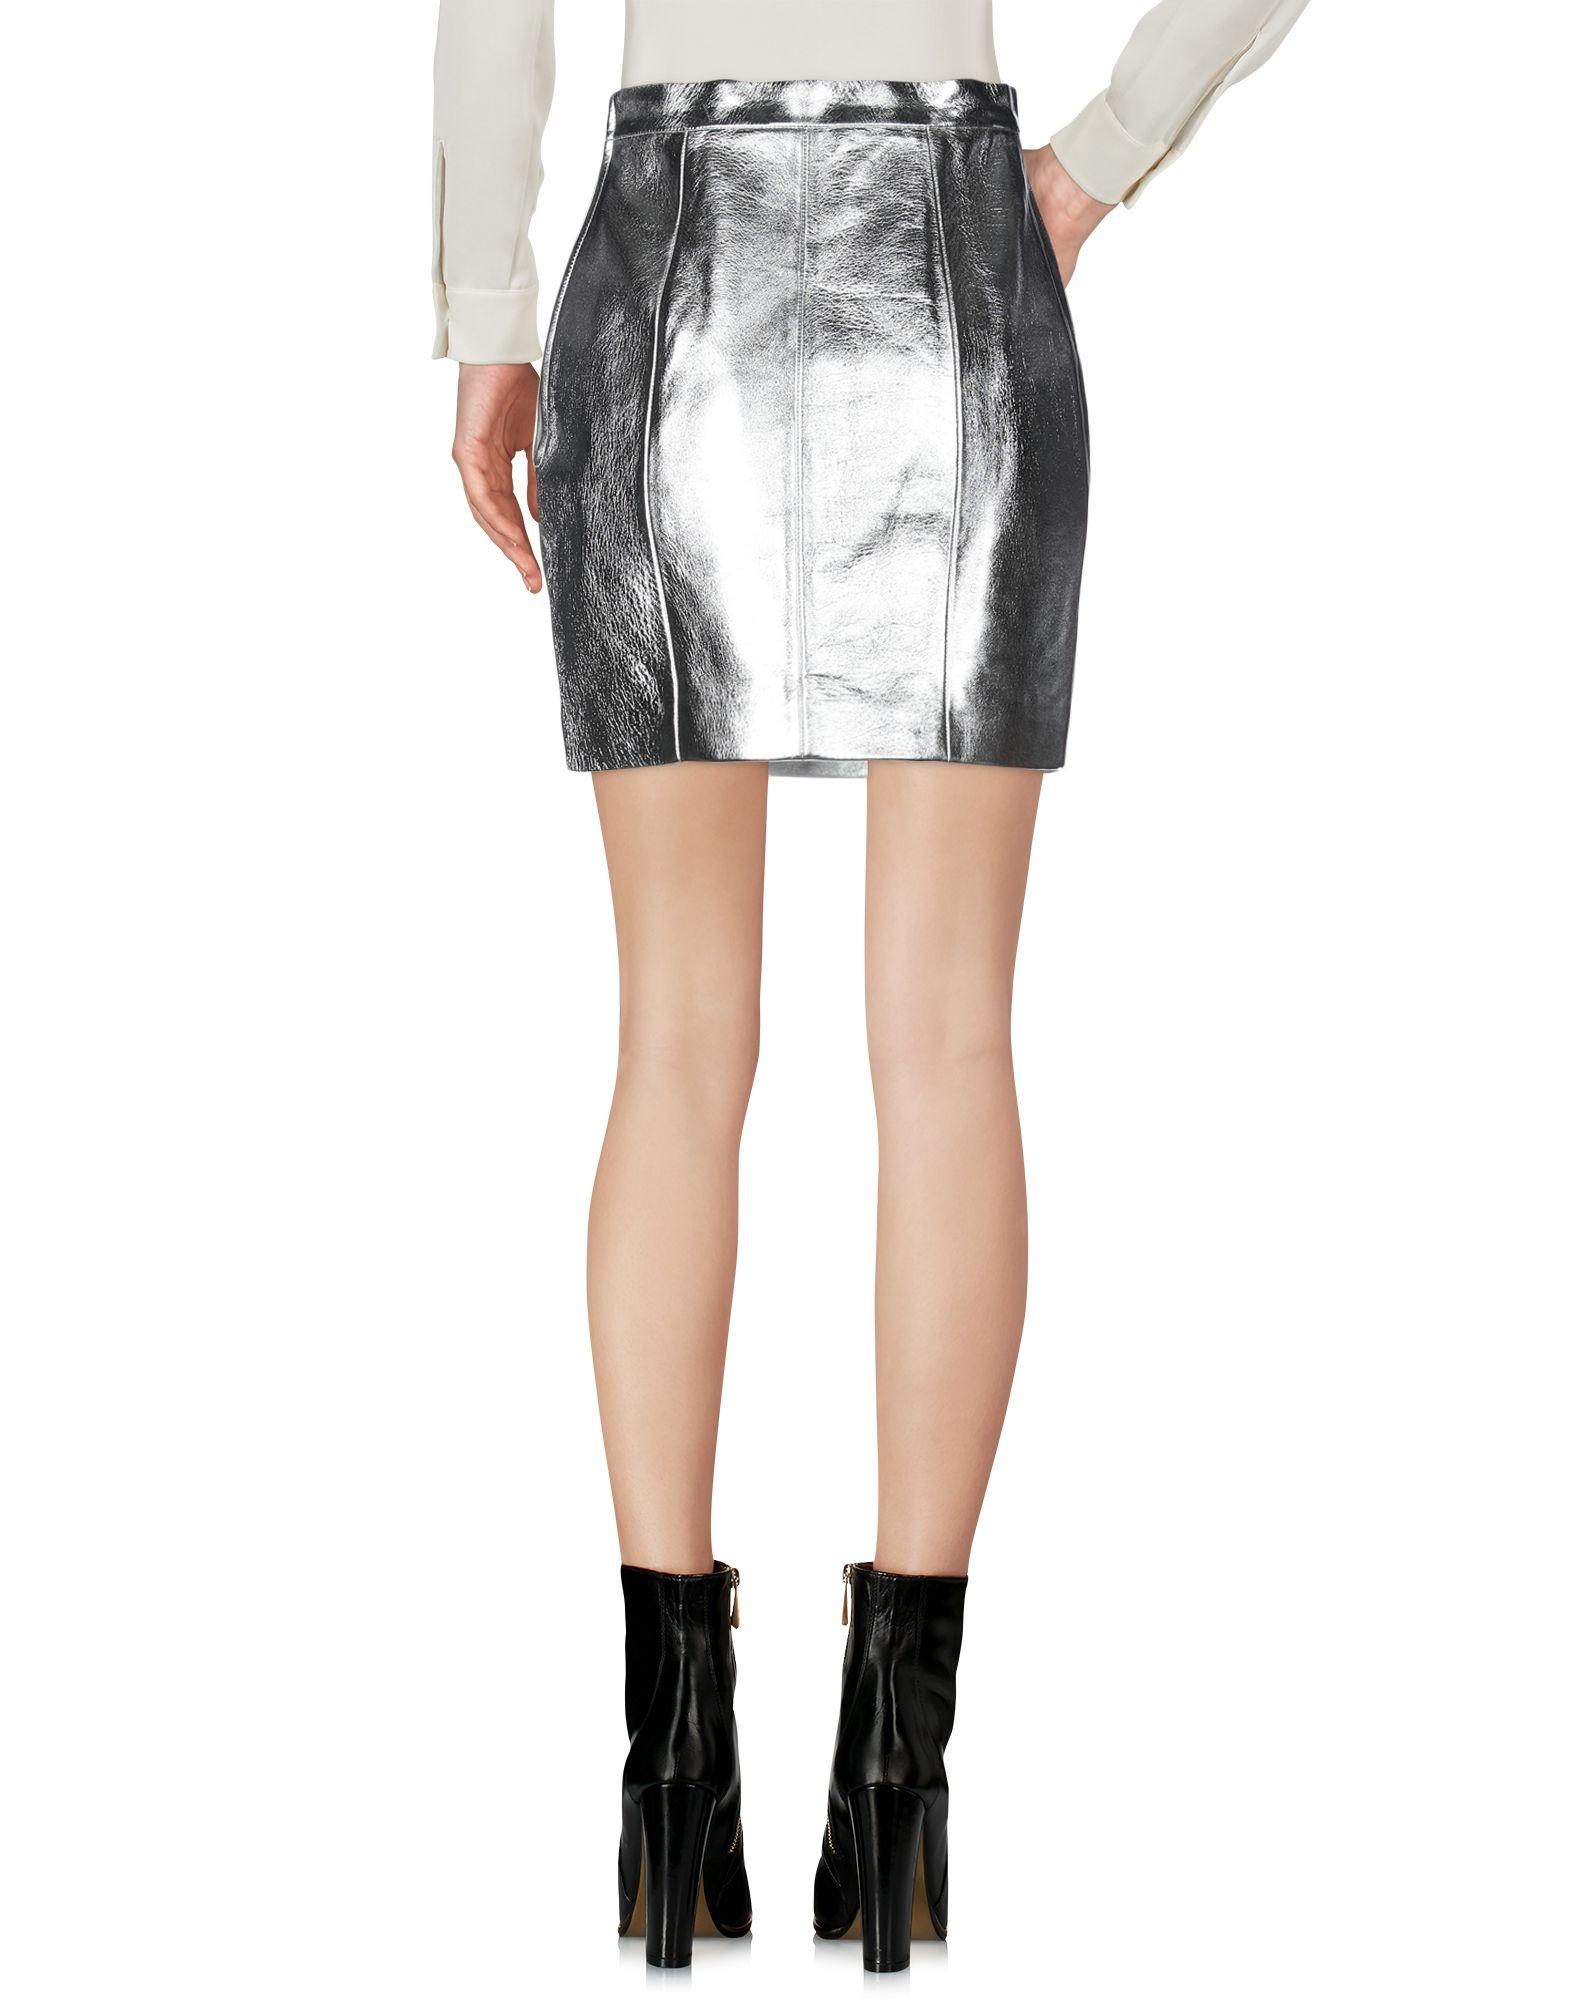 Saint Laurent Leather Mini Skirt in Silver (Metallic) - Lyst